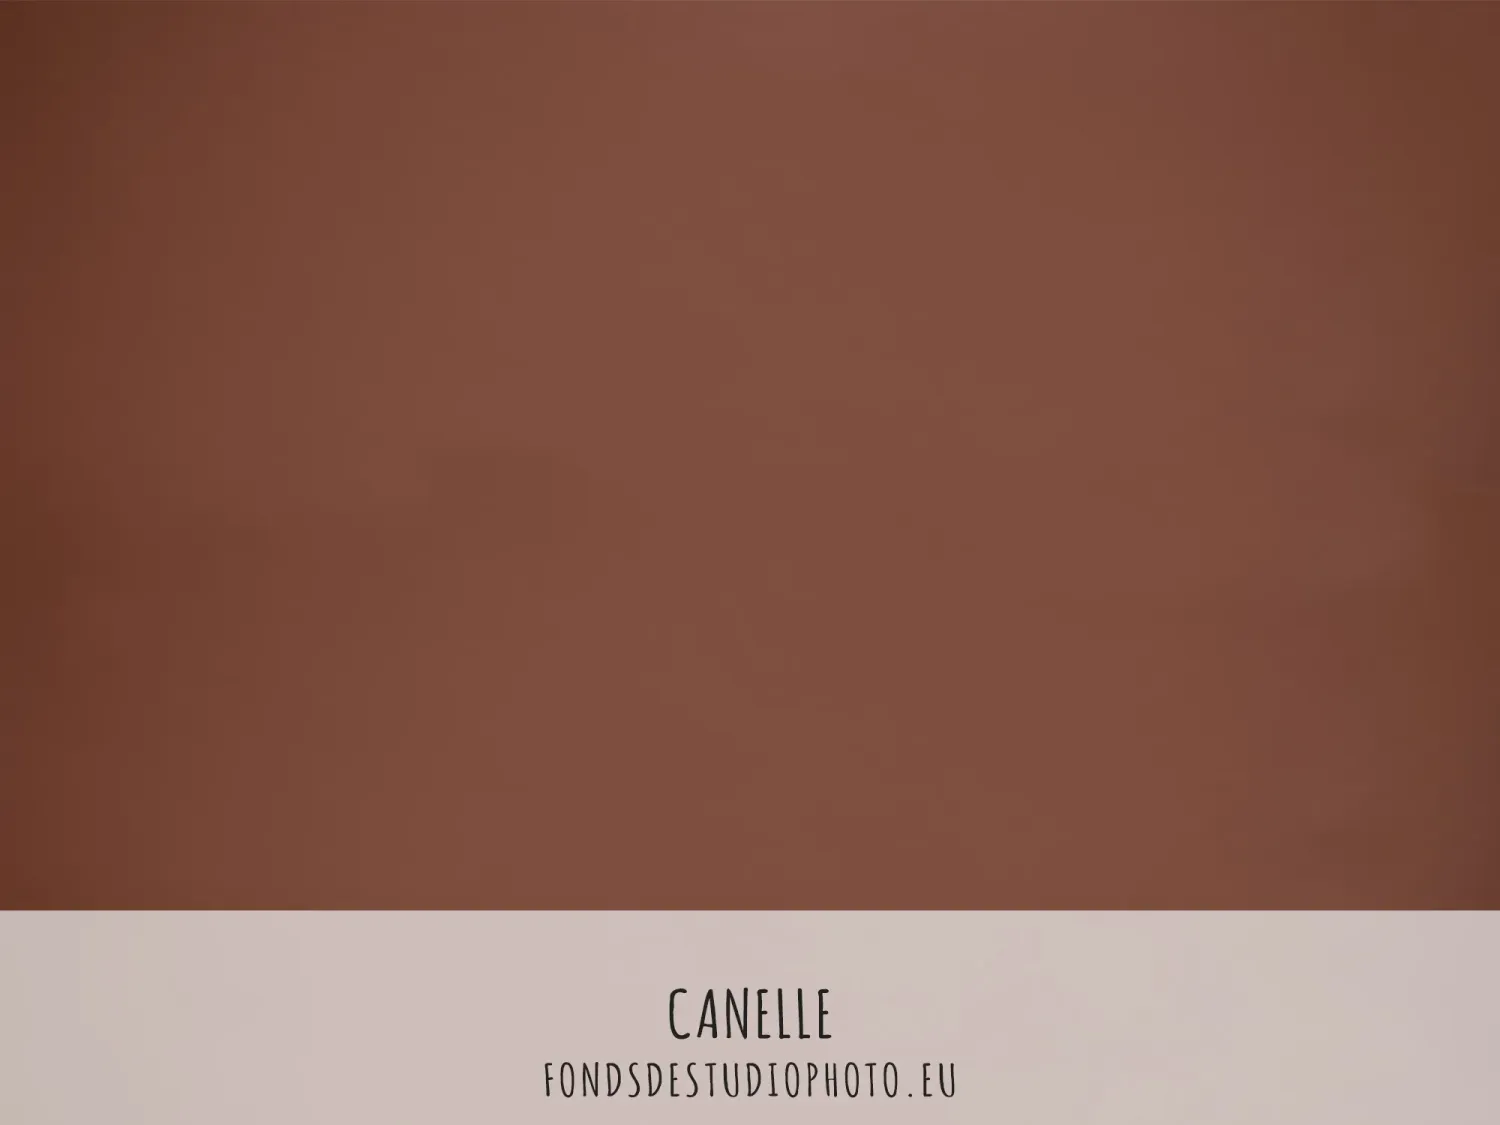 Canelle